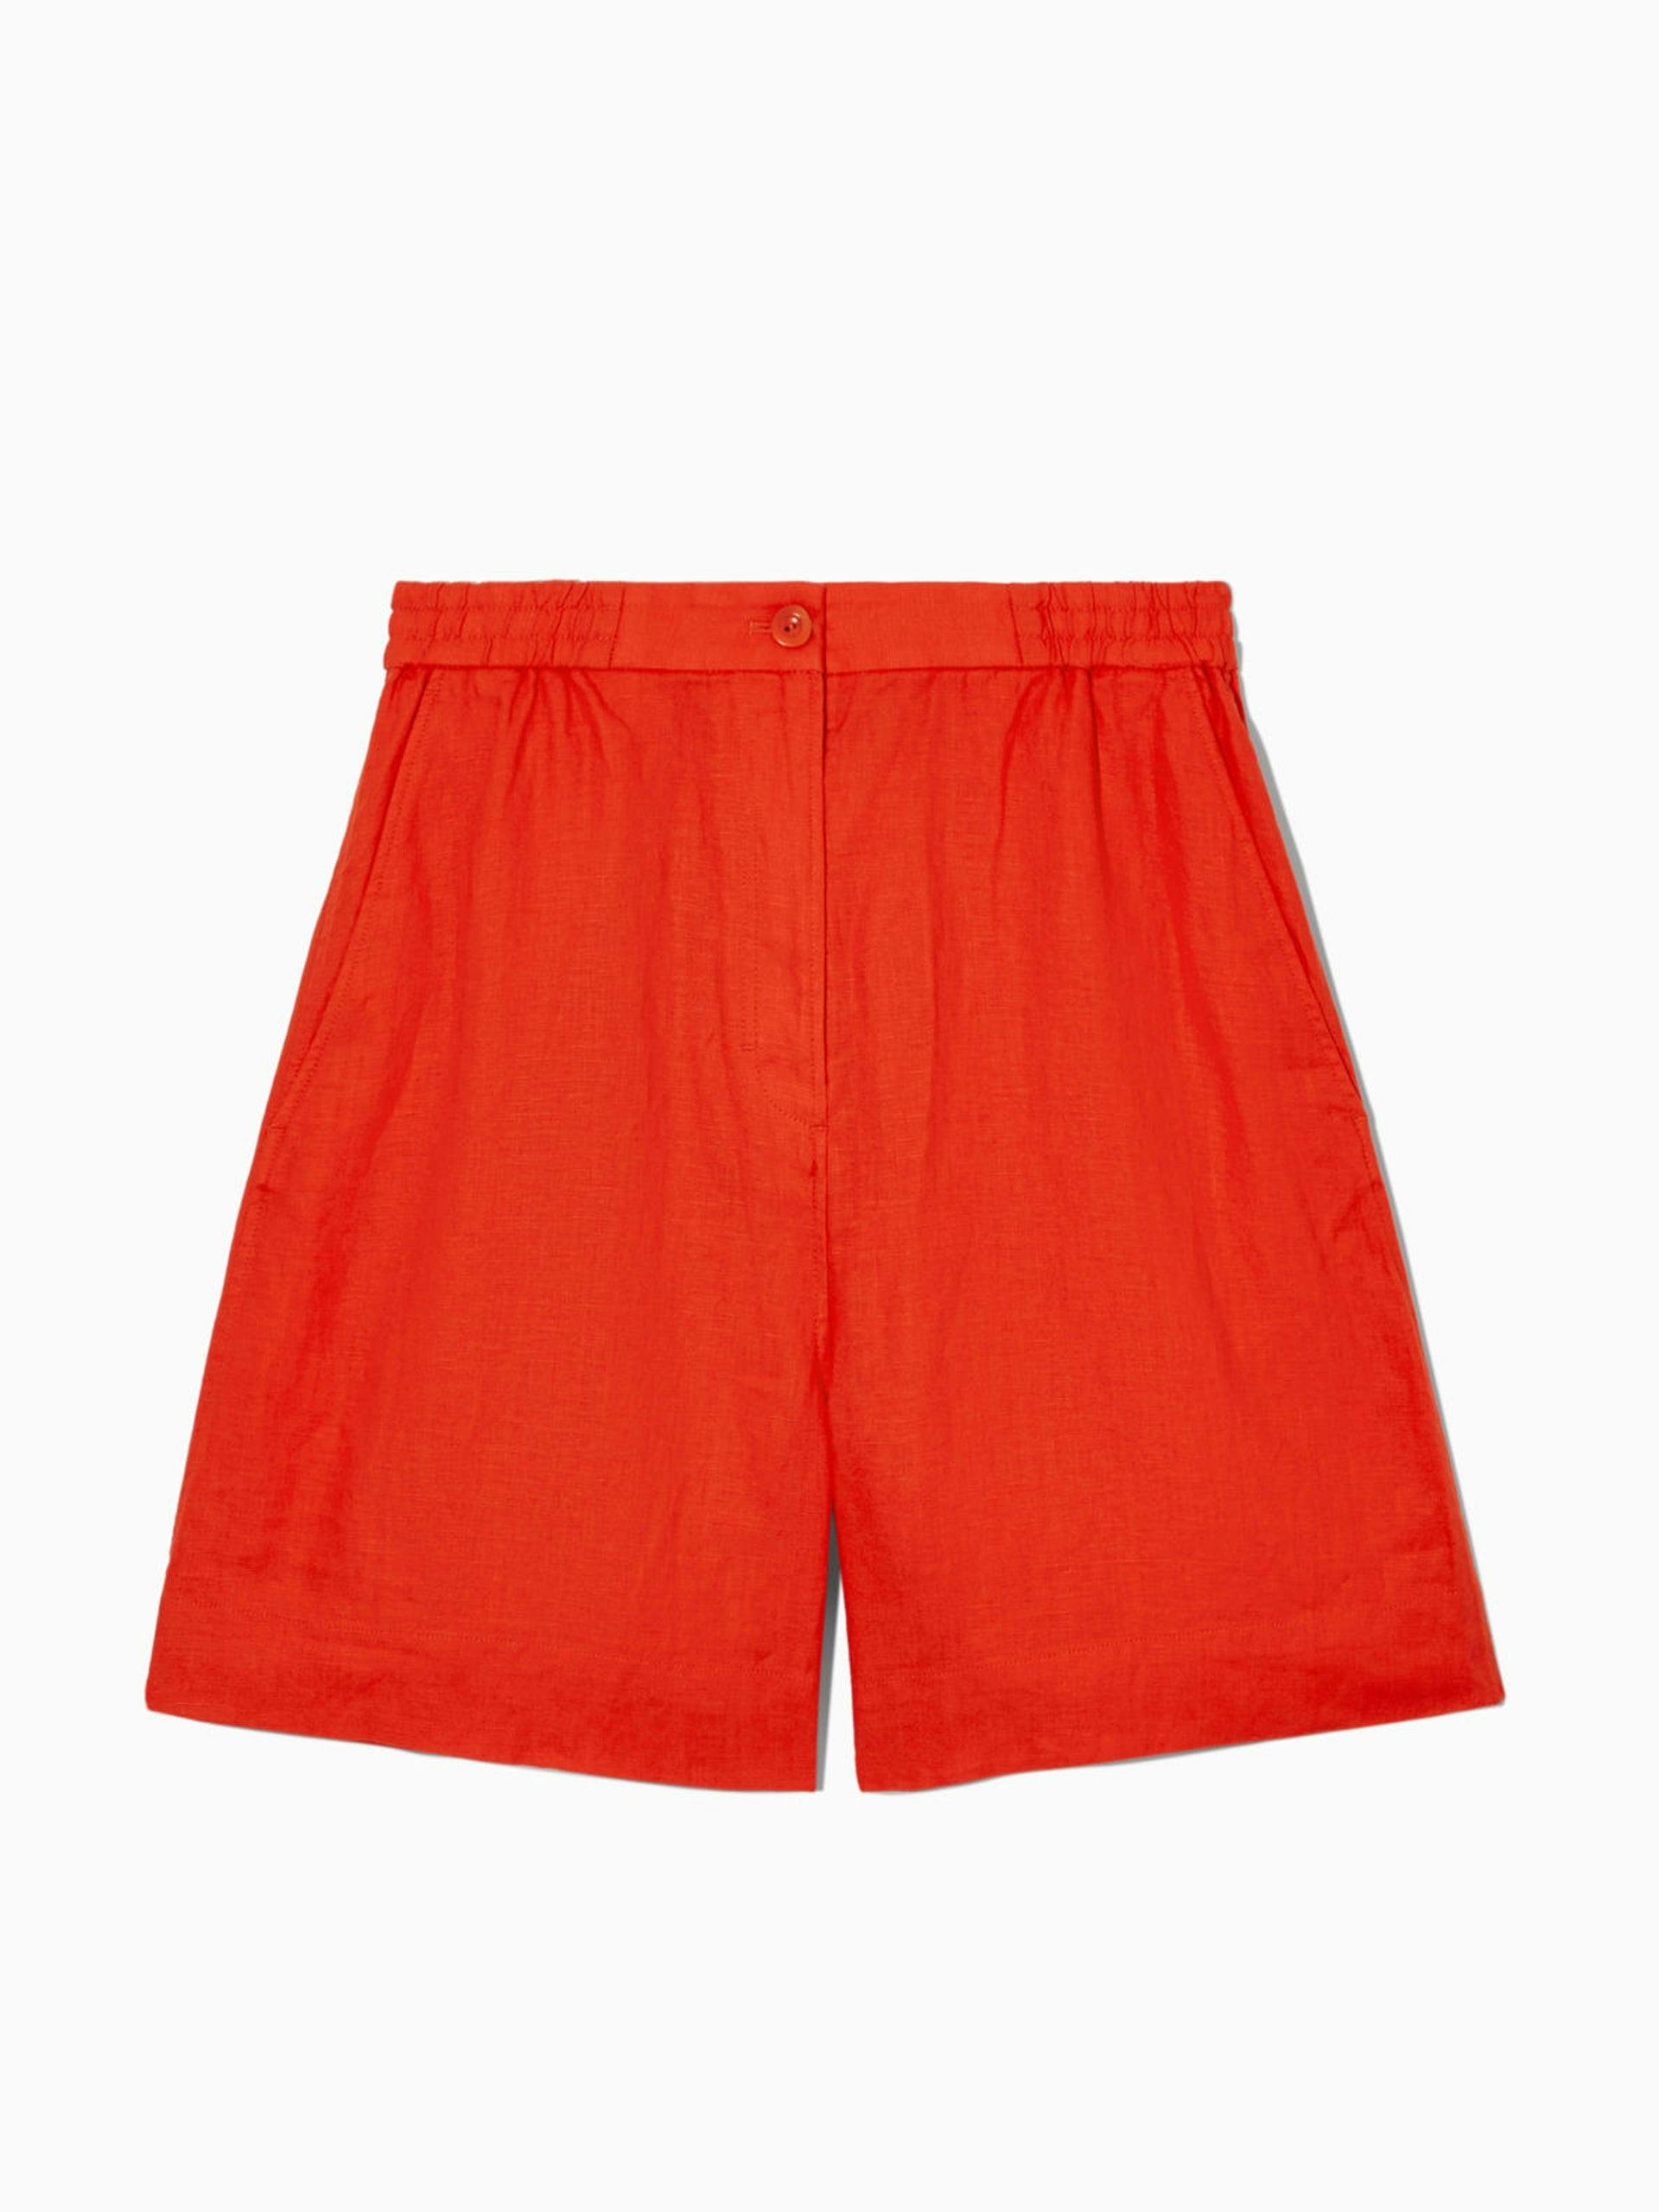 Orange linen shorts